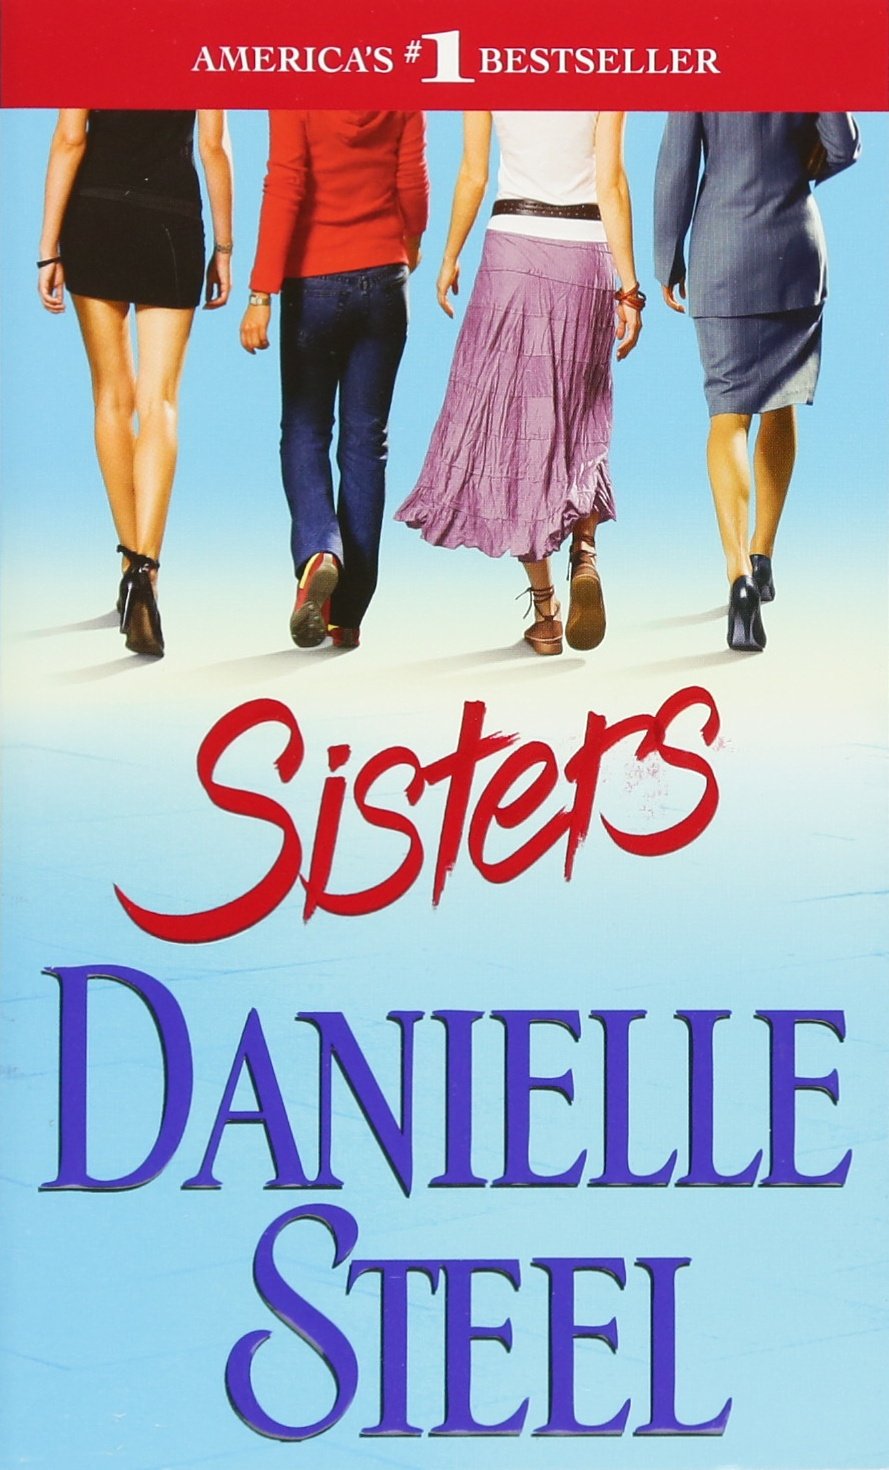 Читать книгу про сестер. Стил сестры. Книга сестры. Книги про сестер 12+. Sisters to sisters Крига.